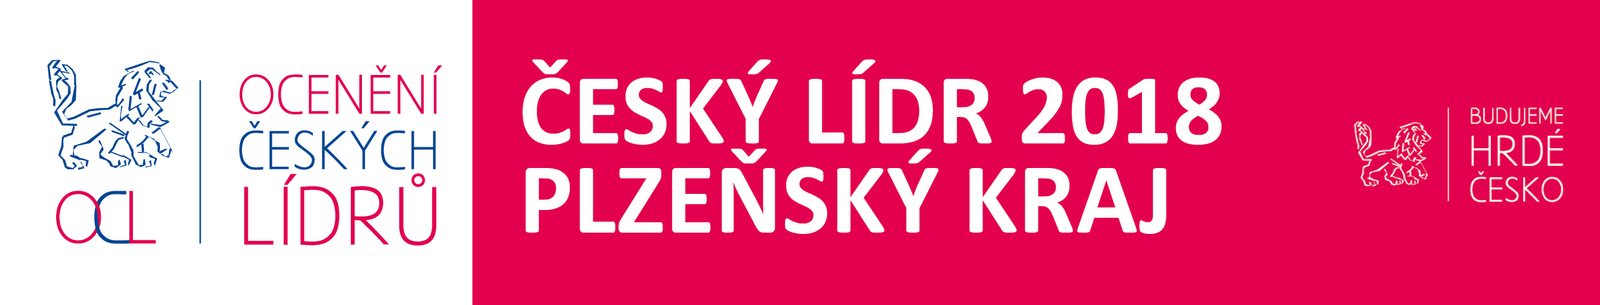 ČESKÝ LÍDR 2018 - Plzeňský kraj.jpg